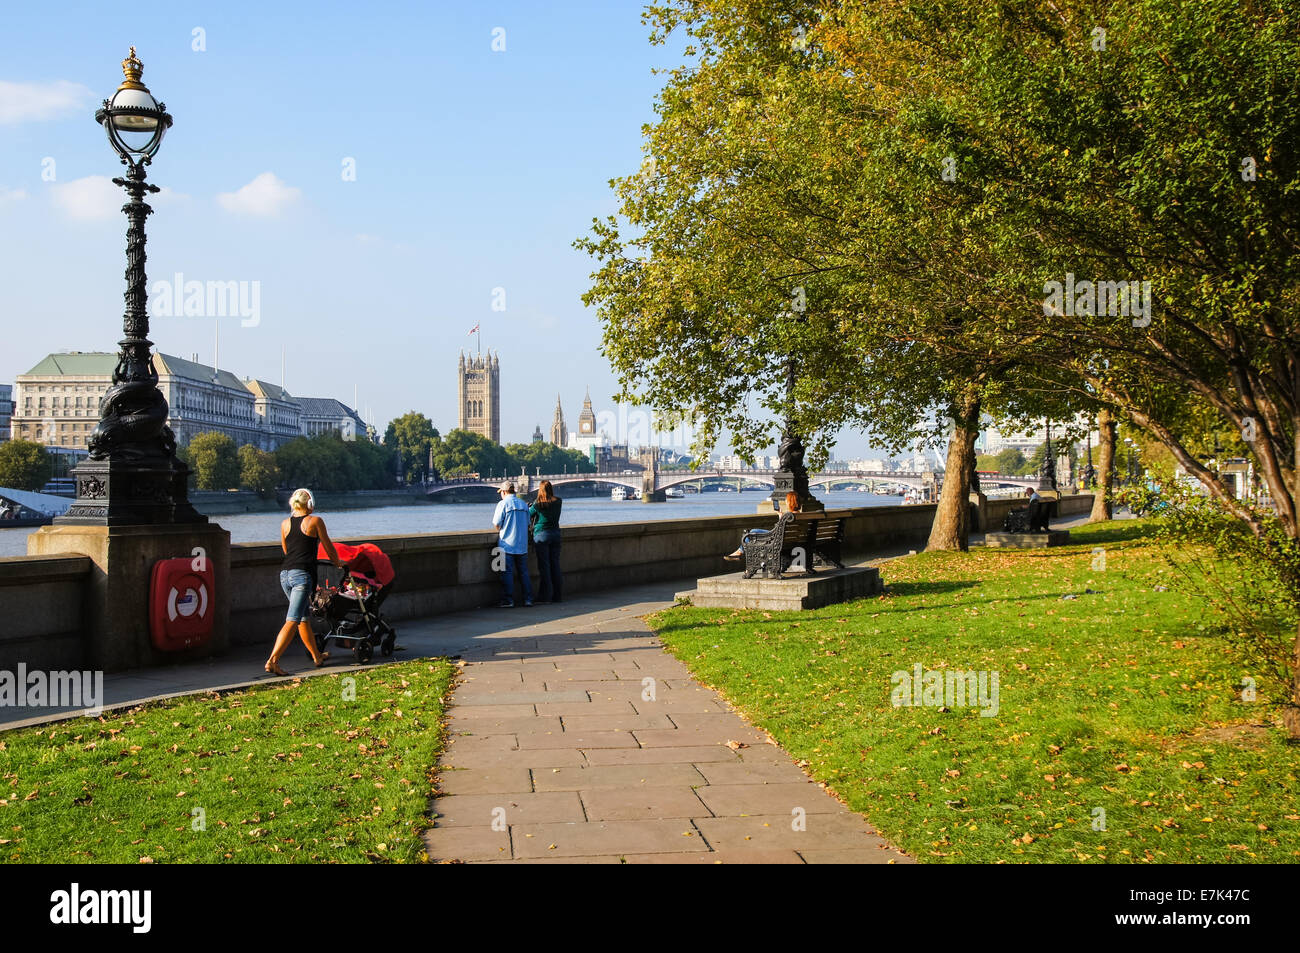 People walking along the river Thames on Albert Embankment in London England United Kingdom UK Stock Photo